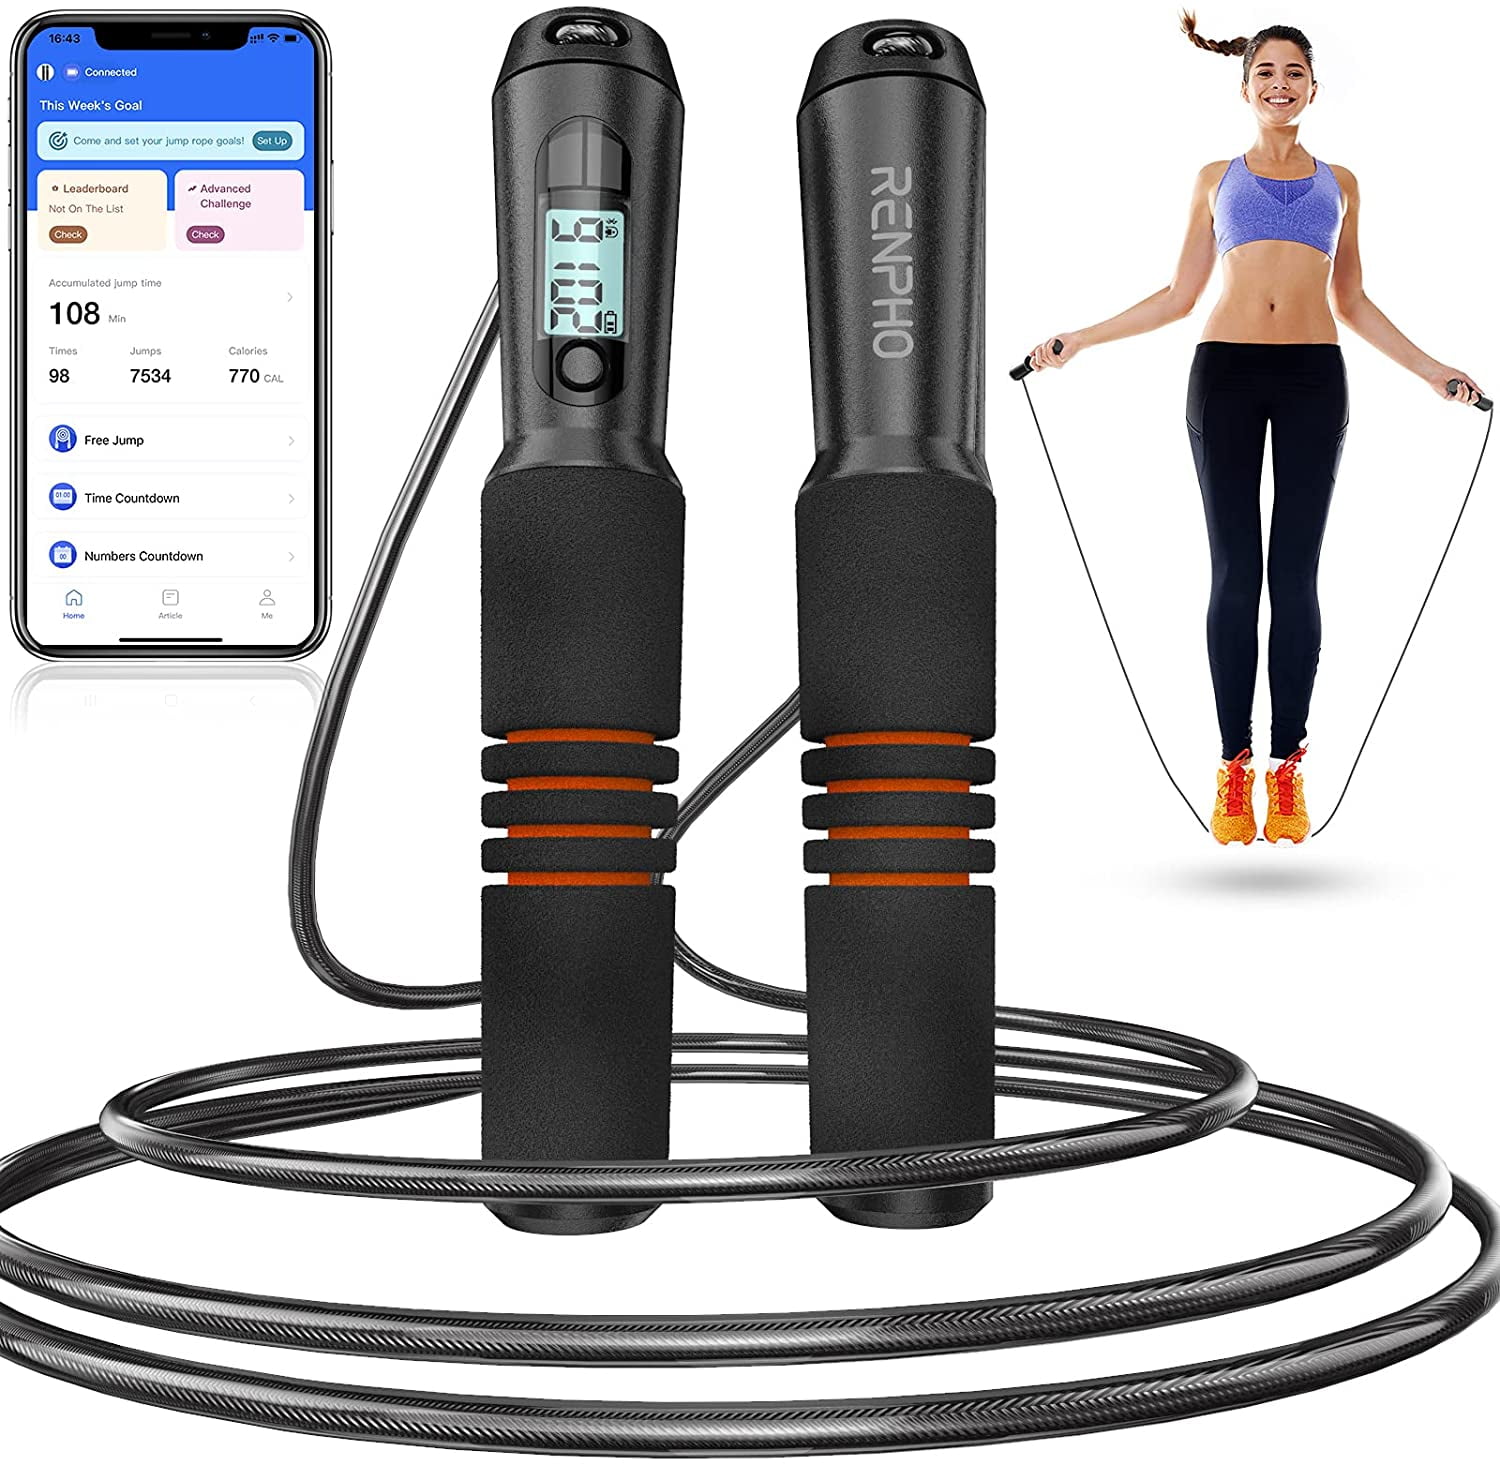 Adjustable jump rope fitness sport leisure activity fitness crossfit corp 